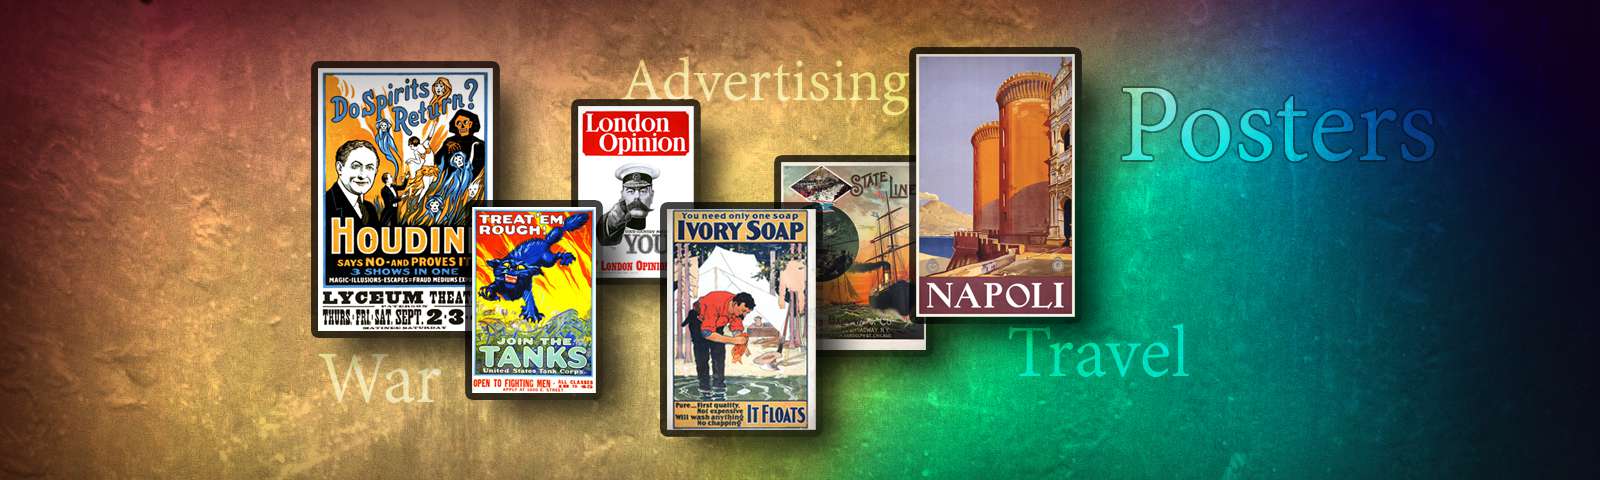 Posters - World War, Travel, Advertising...